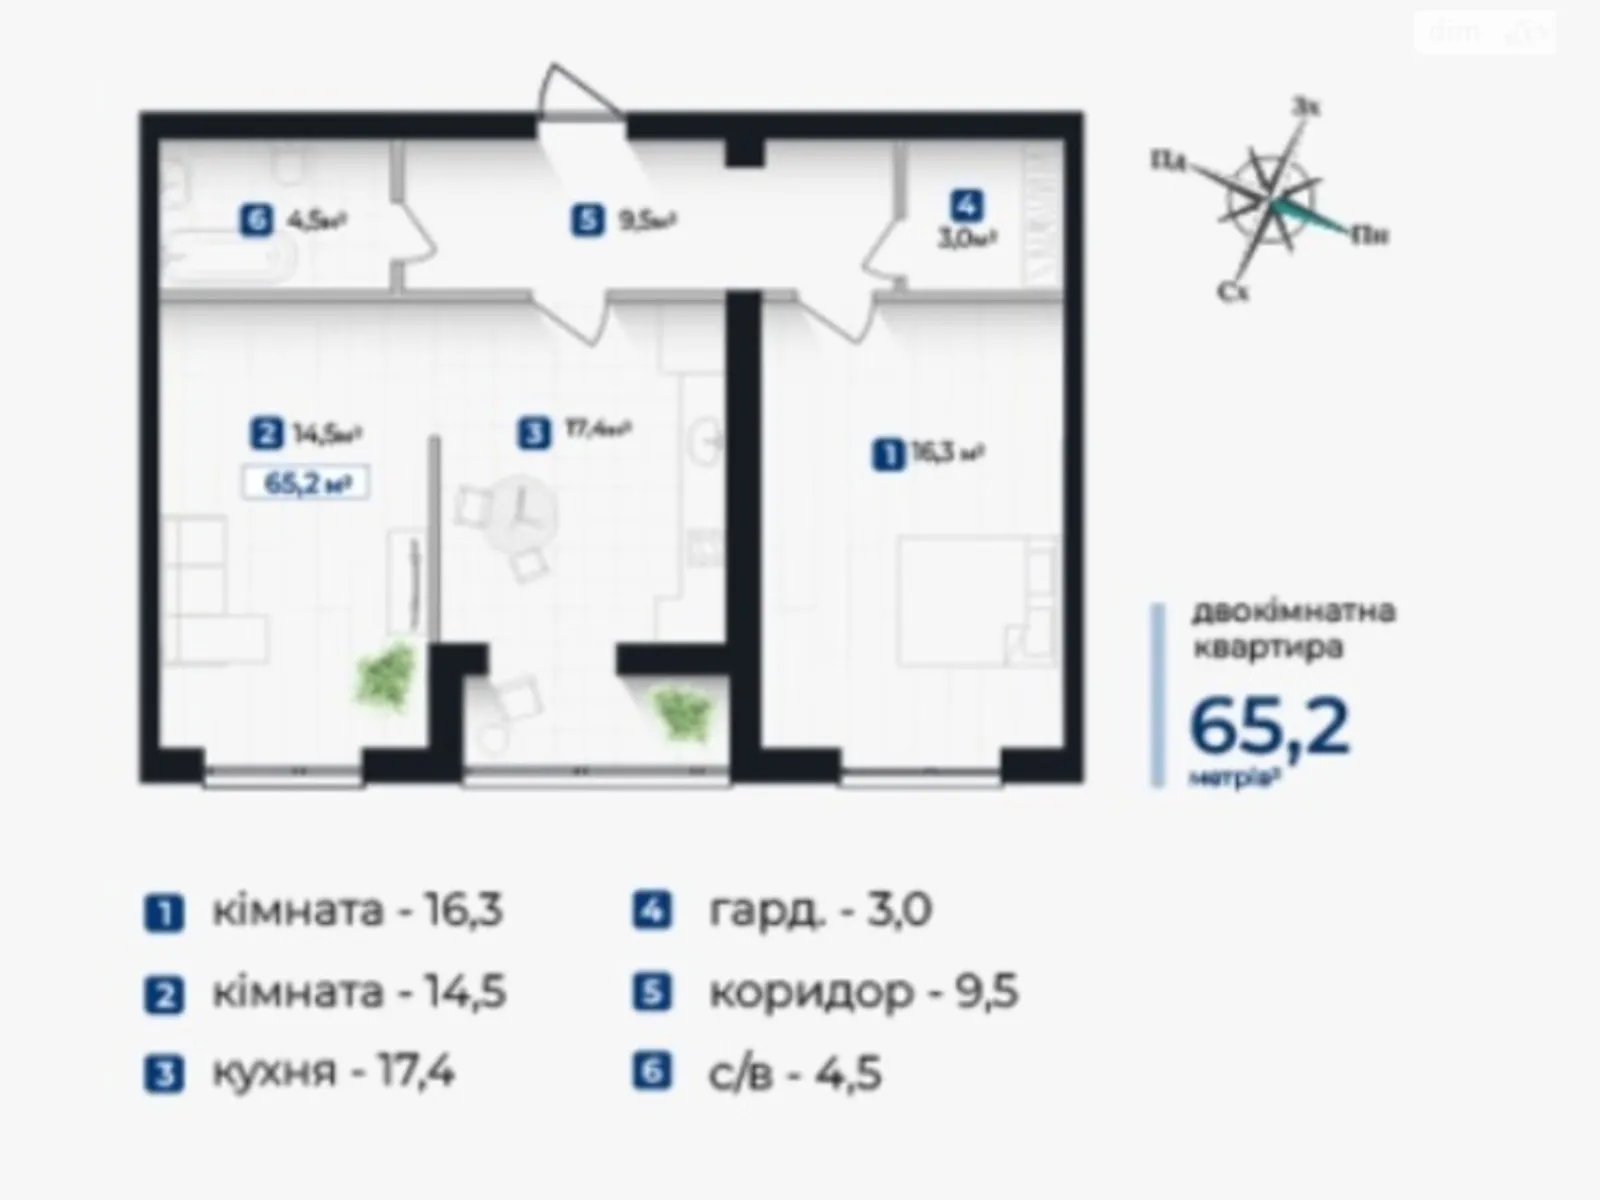 Продается 2-комнатная квартира 65.2 кв. м в Ивано-Франковске, ул. Молодежная, 148 - фото 1